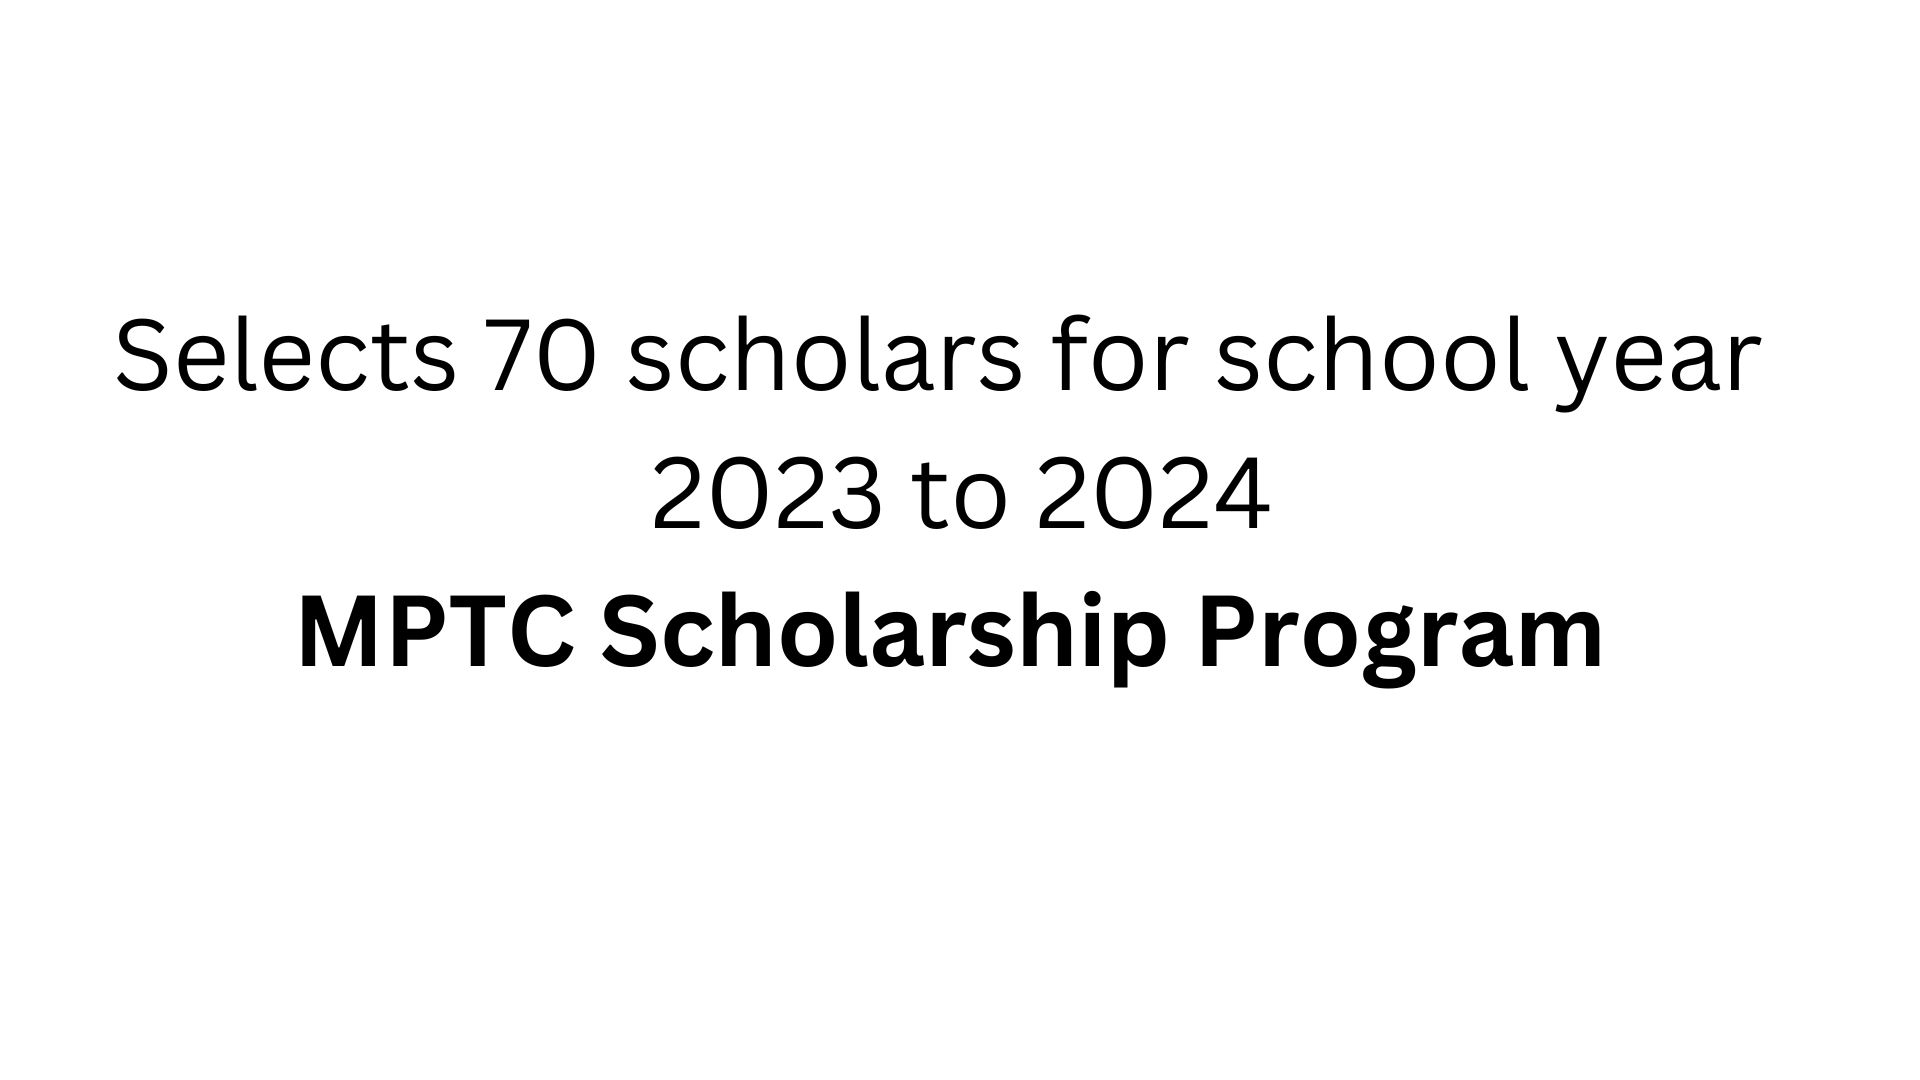 MPTC Scholarship Program 2023 too 2024